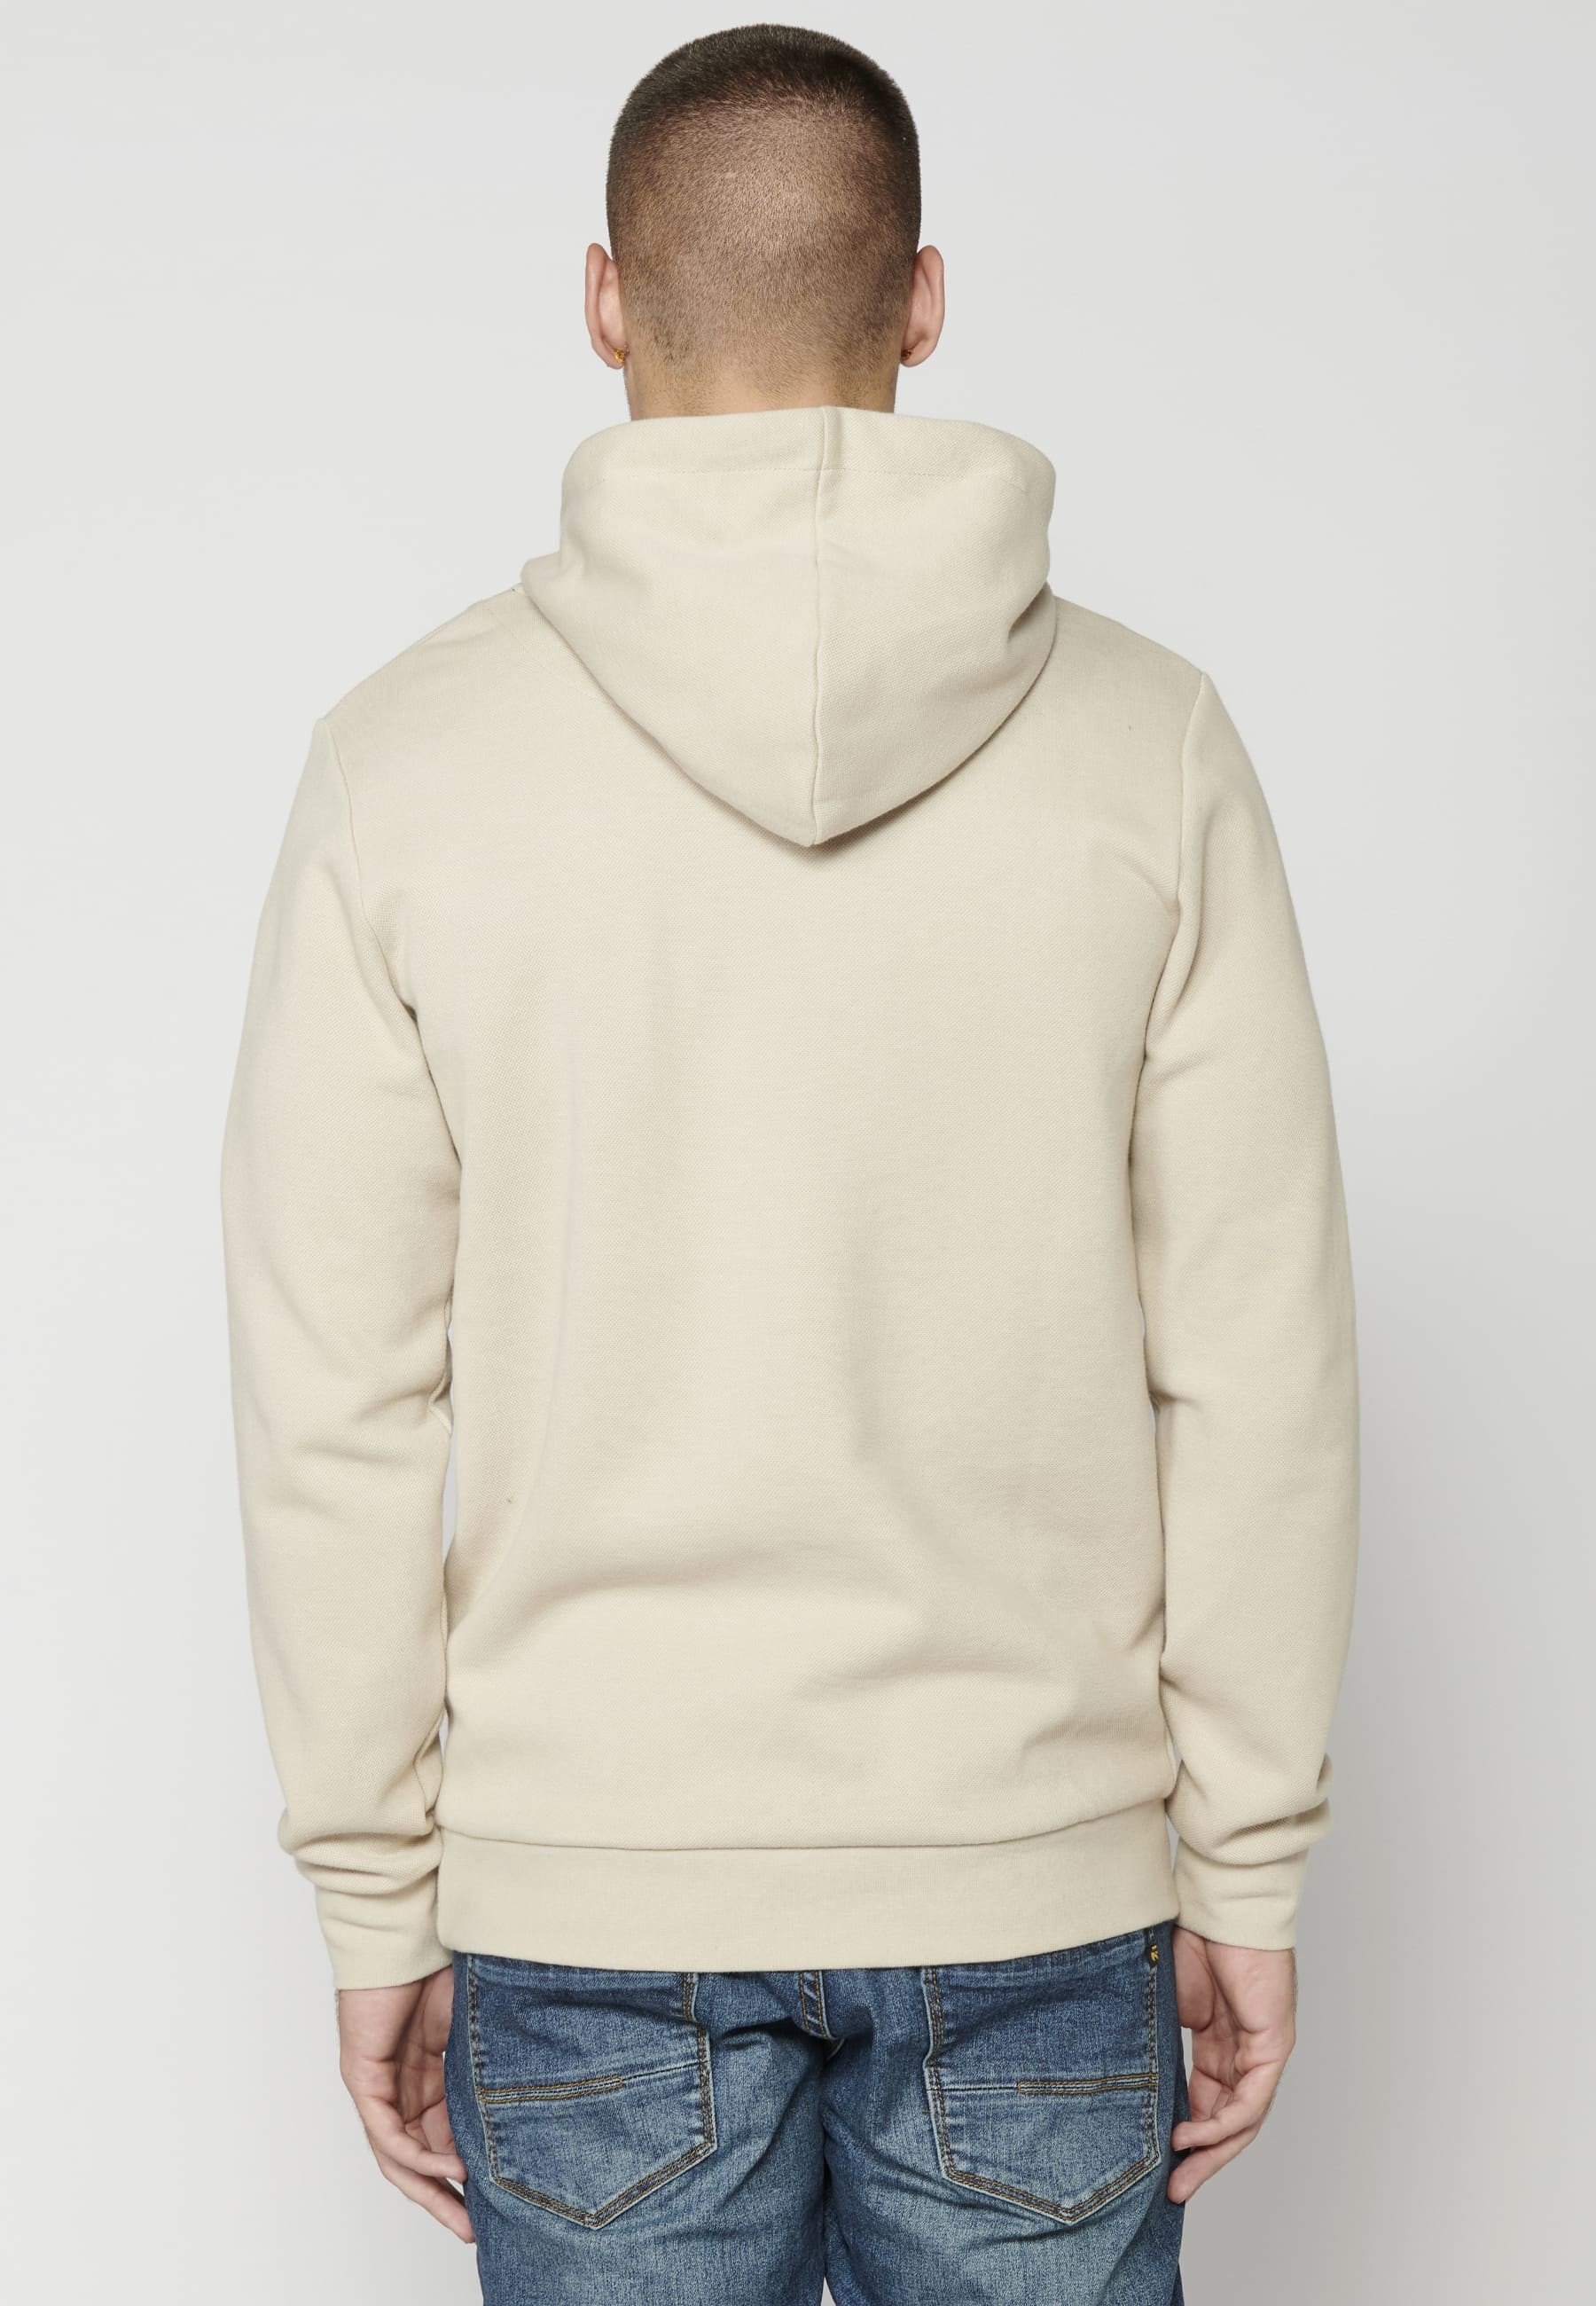 Sand Color Long Sleeve Hooded Sweatshirt for Men